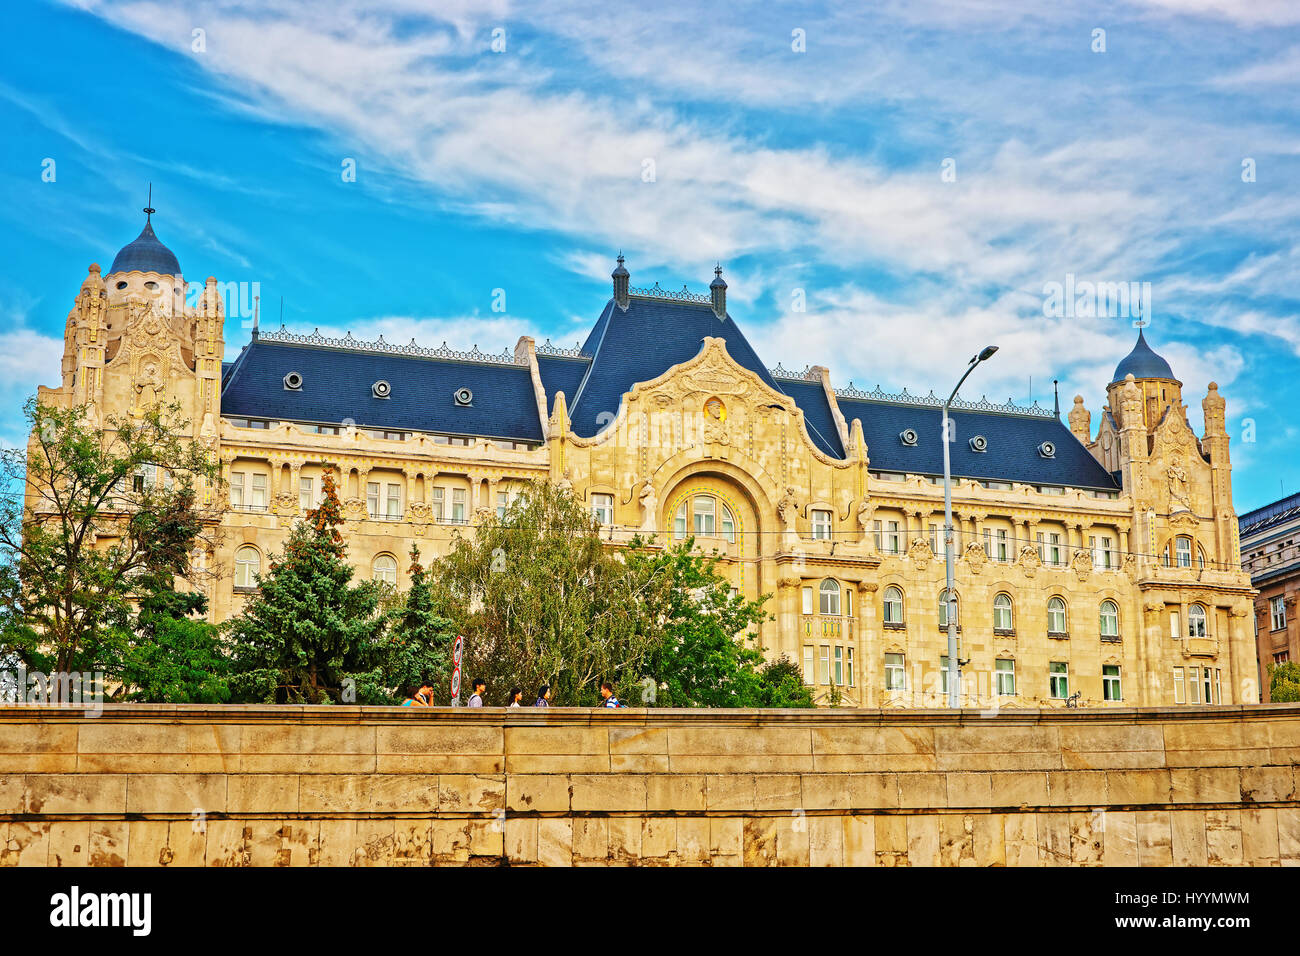 Gresham Palace Building in Budapest, Hungary Stock Photo